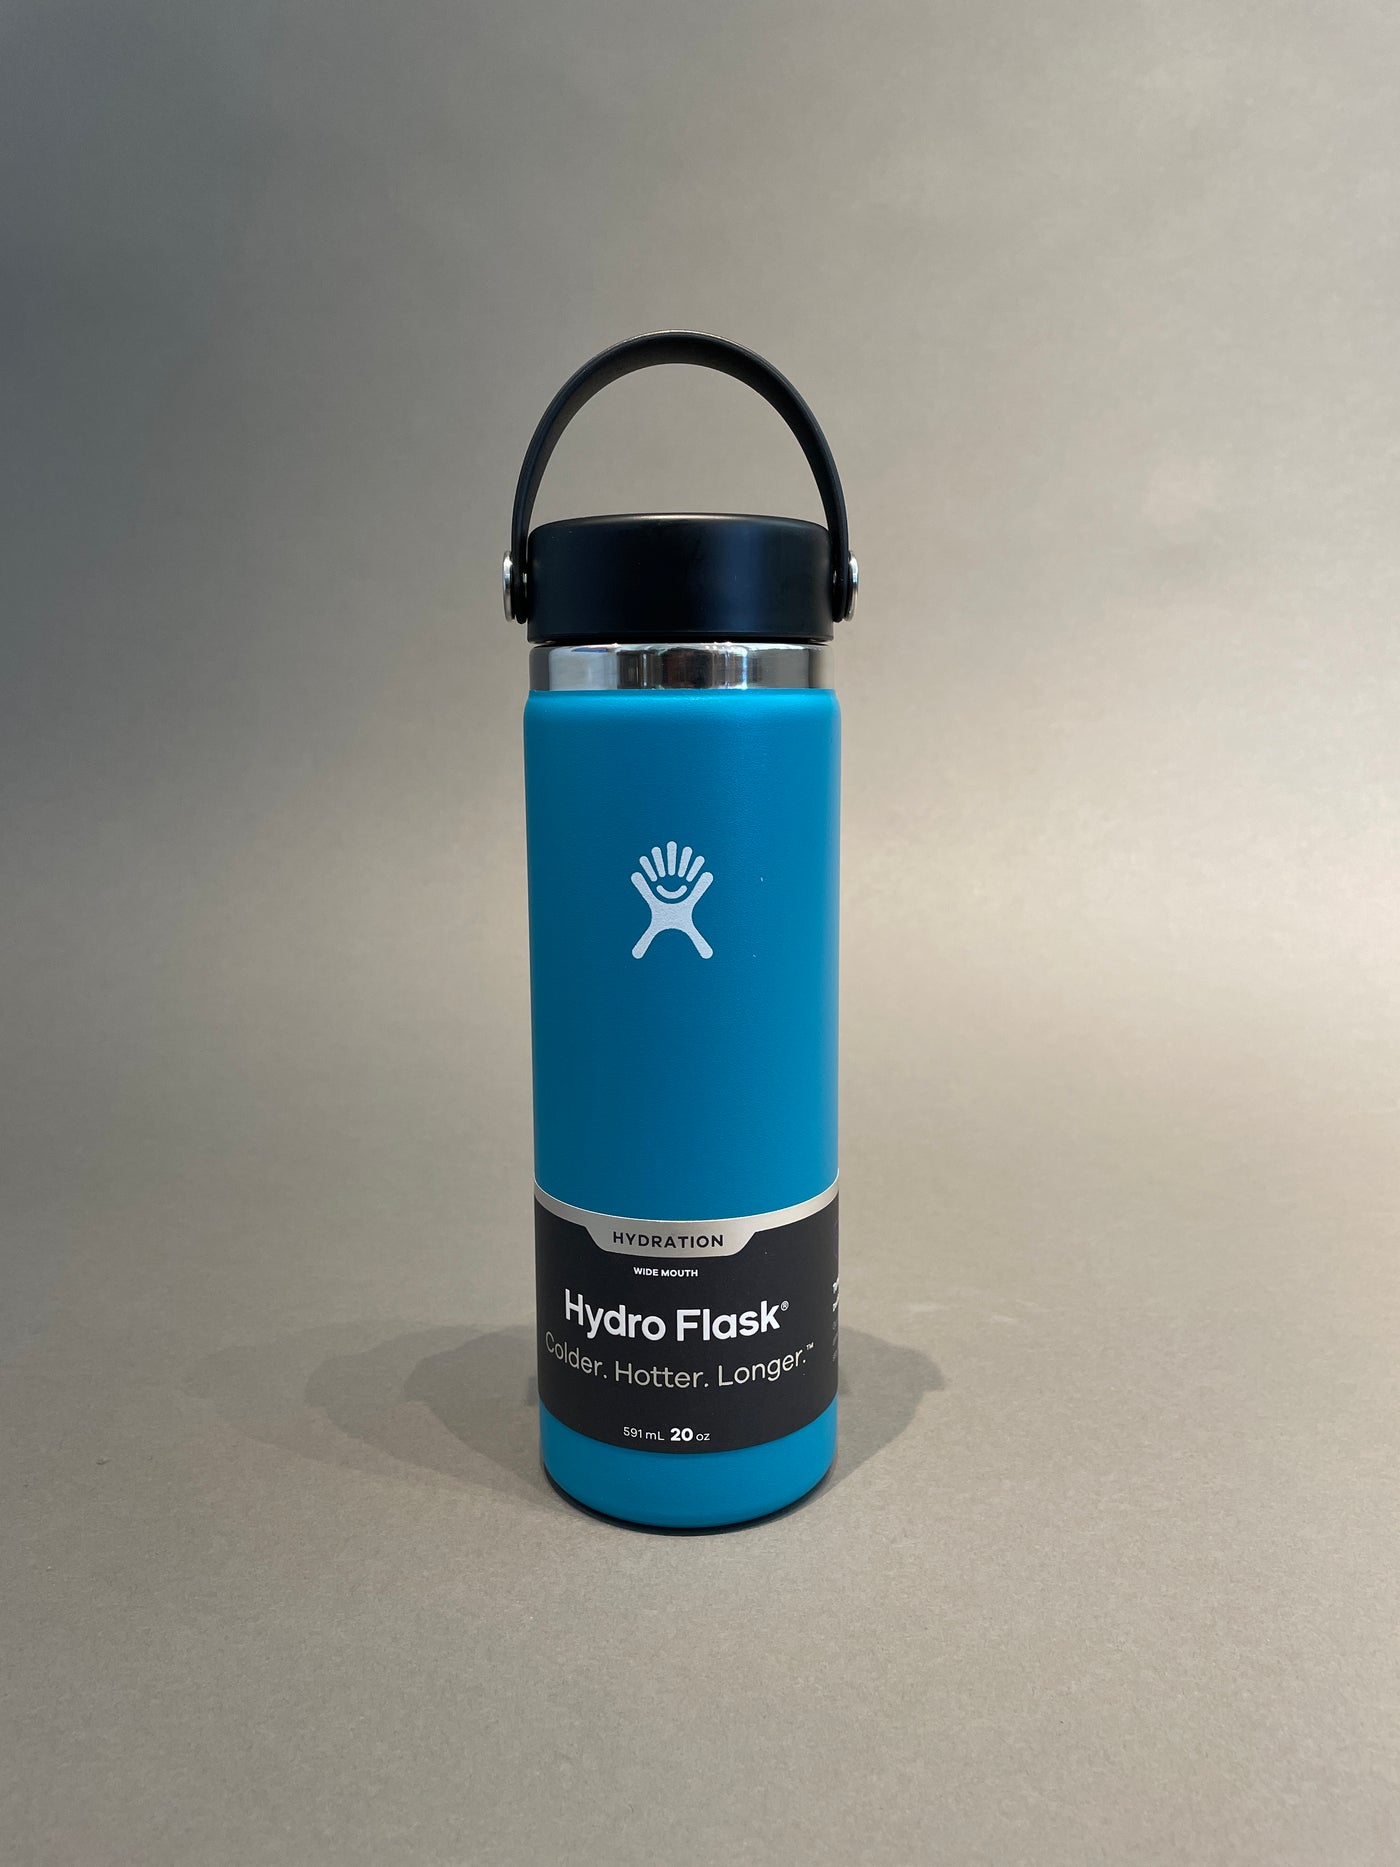 Hydro Flask 24 oz. Mug - Rain